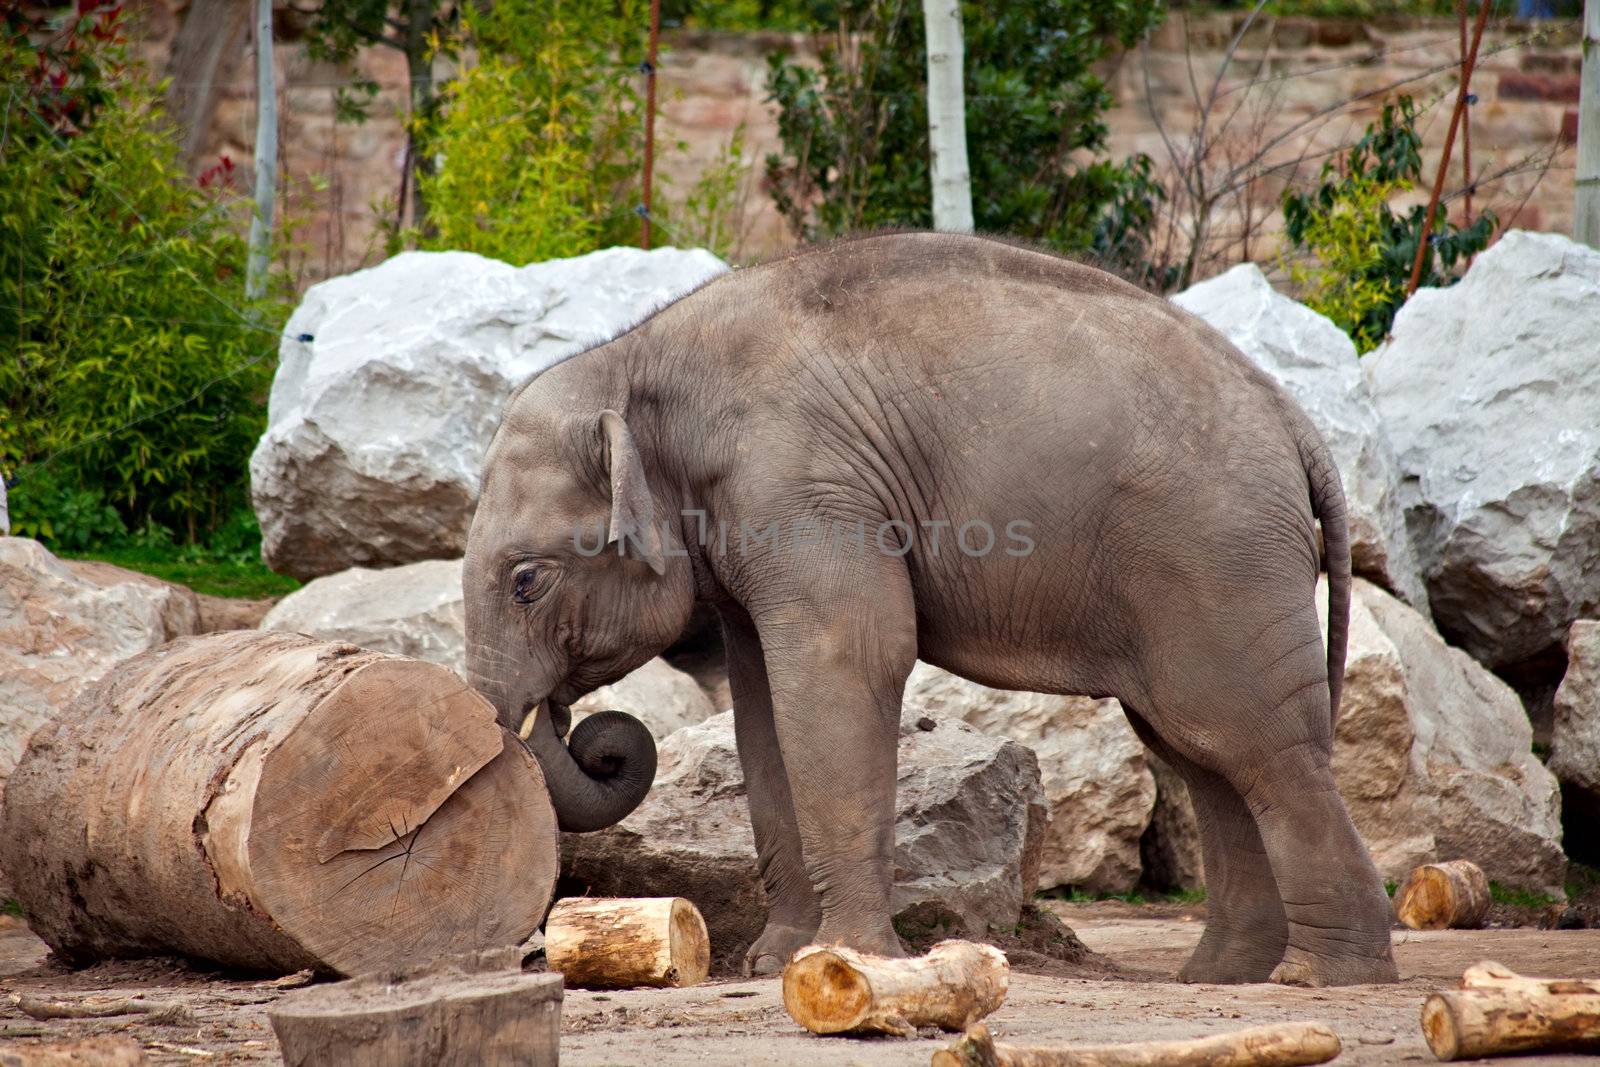 A young elephant pushing a log, working in a lumberyard